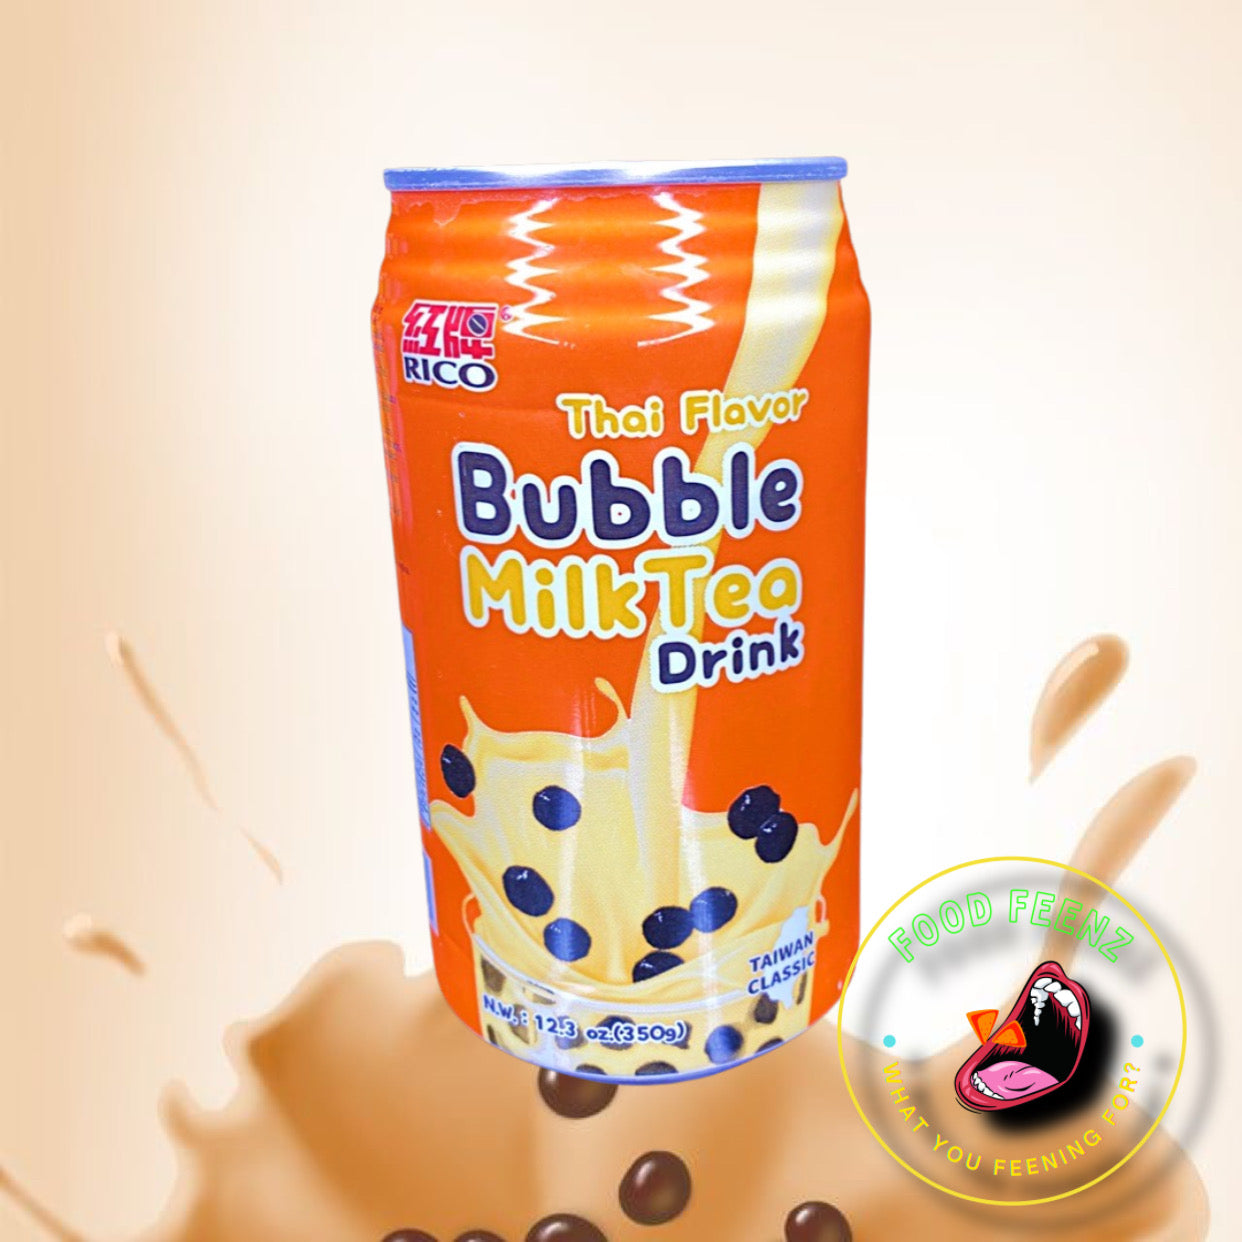 Rico Bubble Milk Tea Drink Thai Flavor